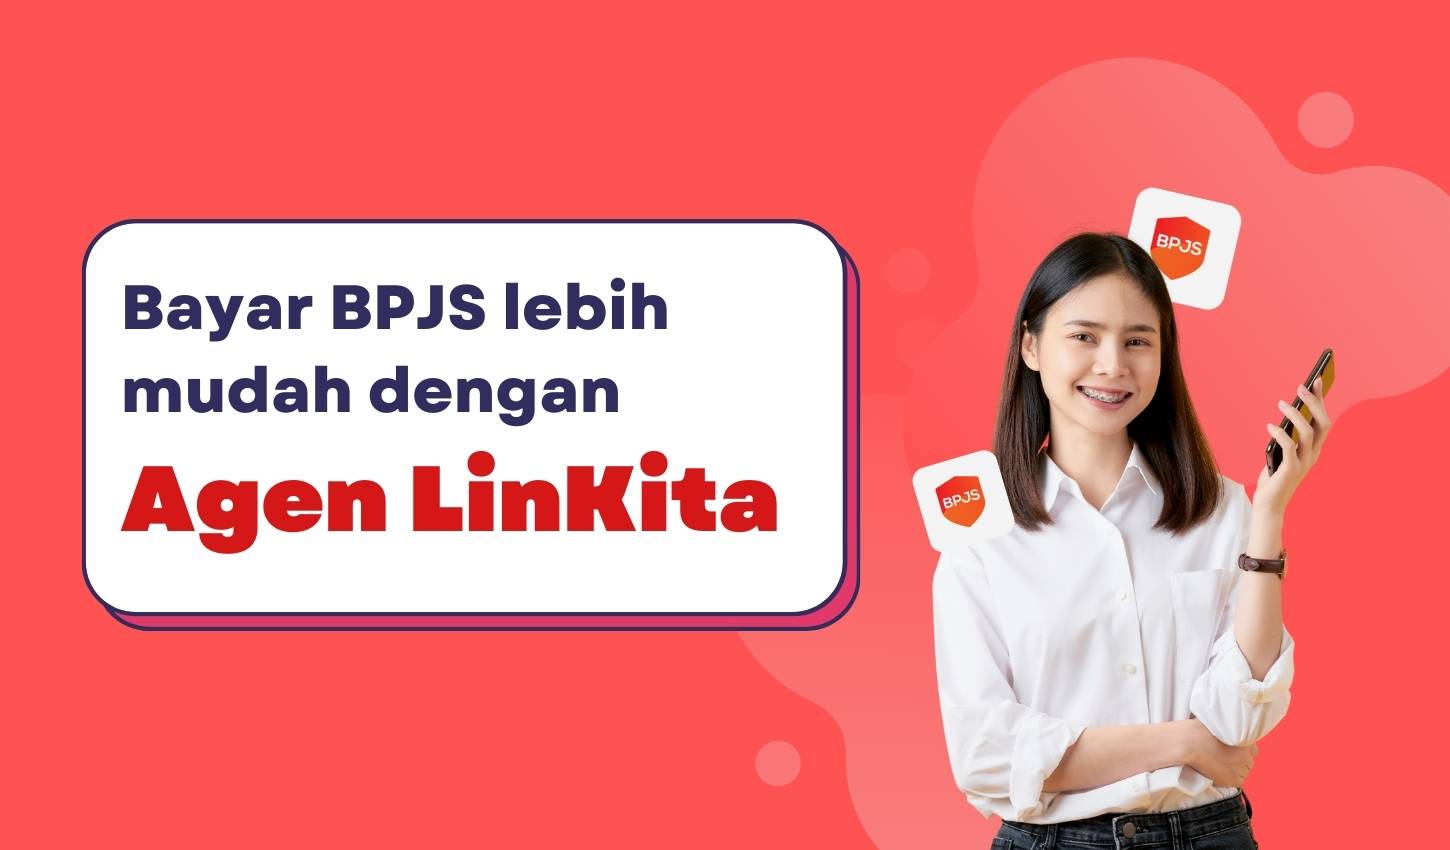 Makin Cuan Bayar BPJS dengan Linkita! Harga Paling Murah Se-Indonesia